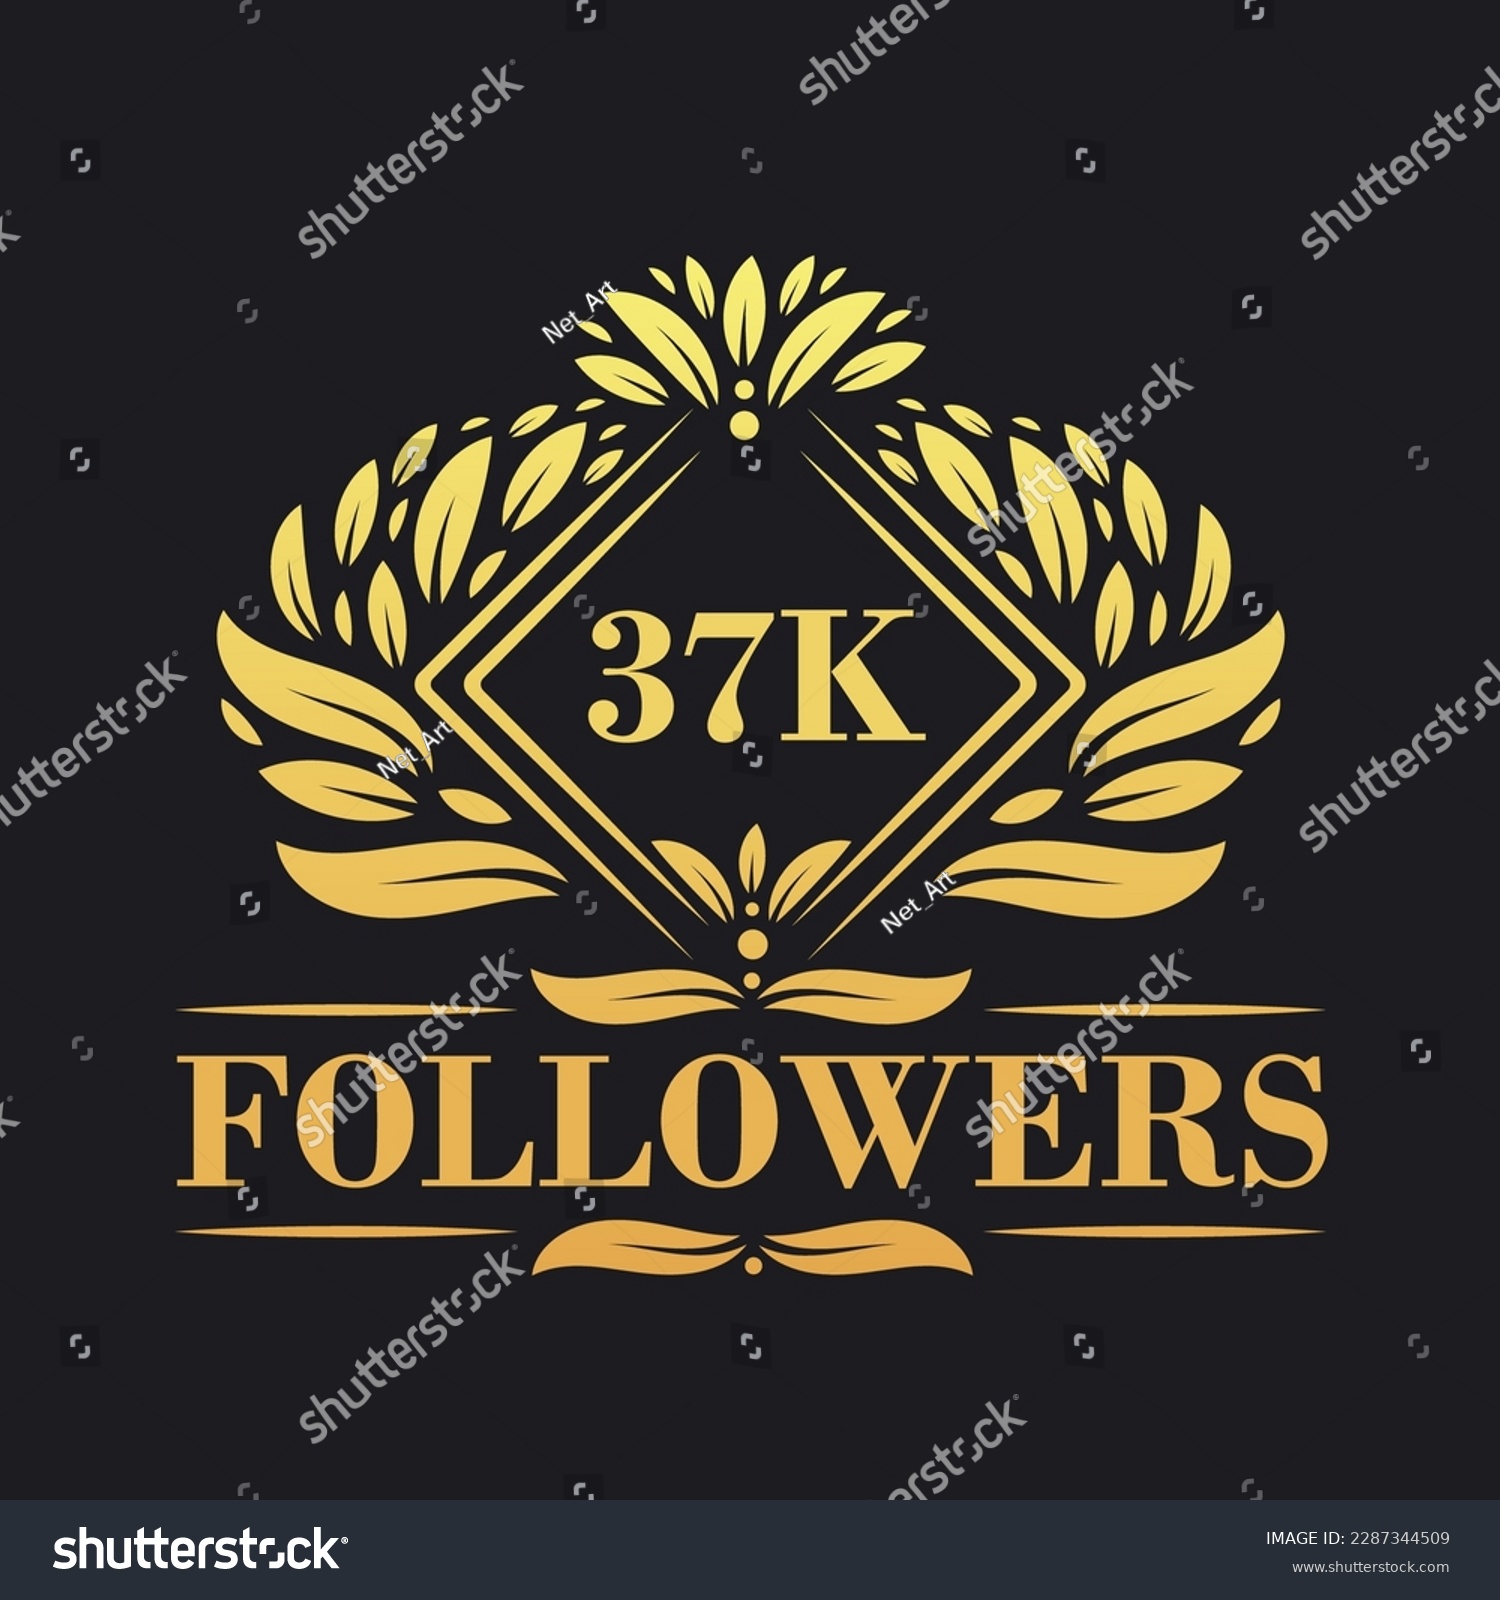 SVG of 37K Followers celebration design. Luxurious 37K Followers logo for social media followers svg